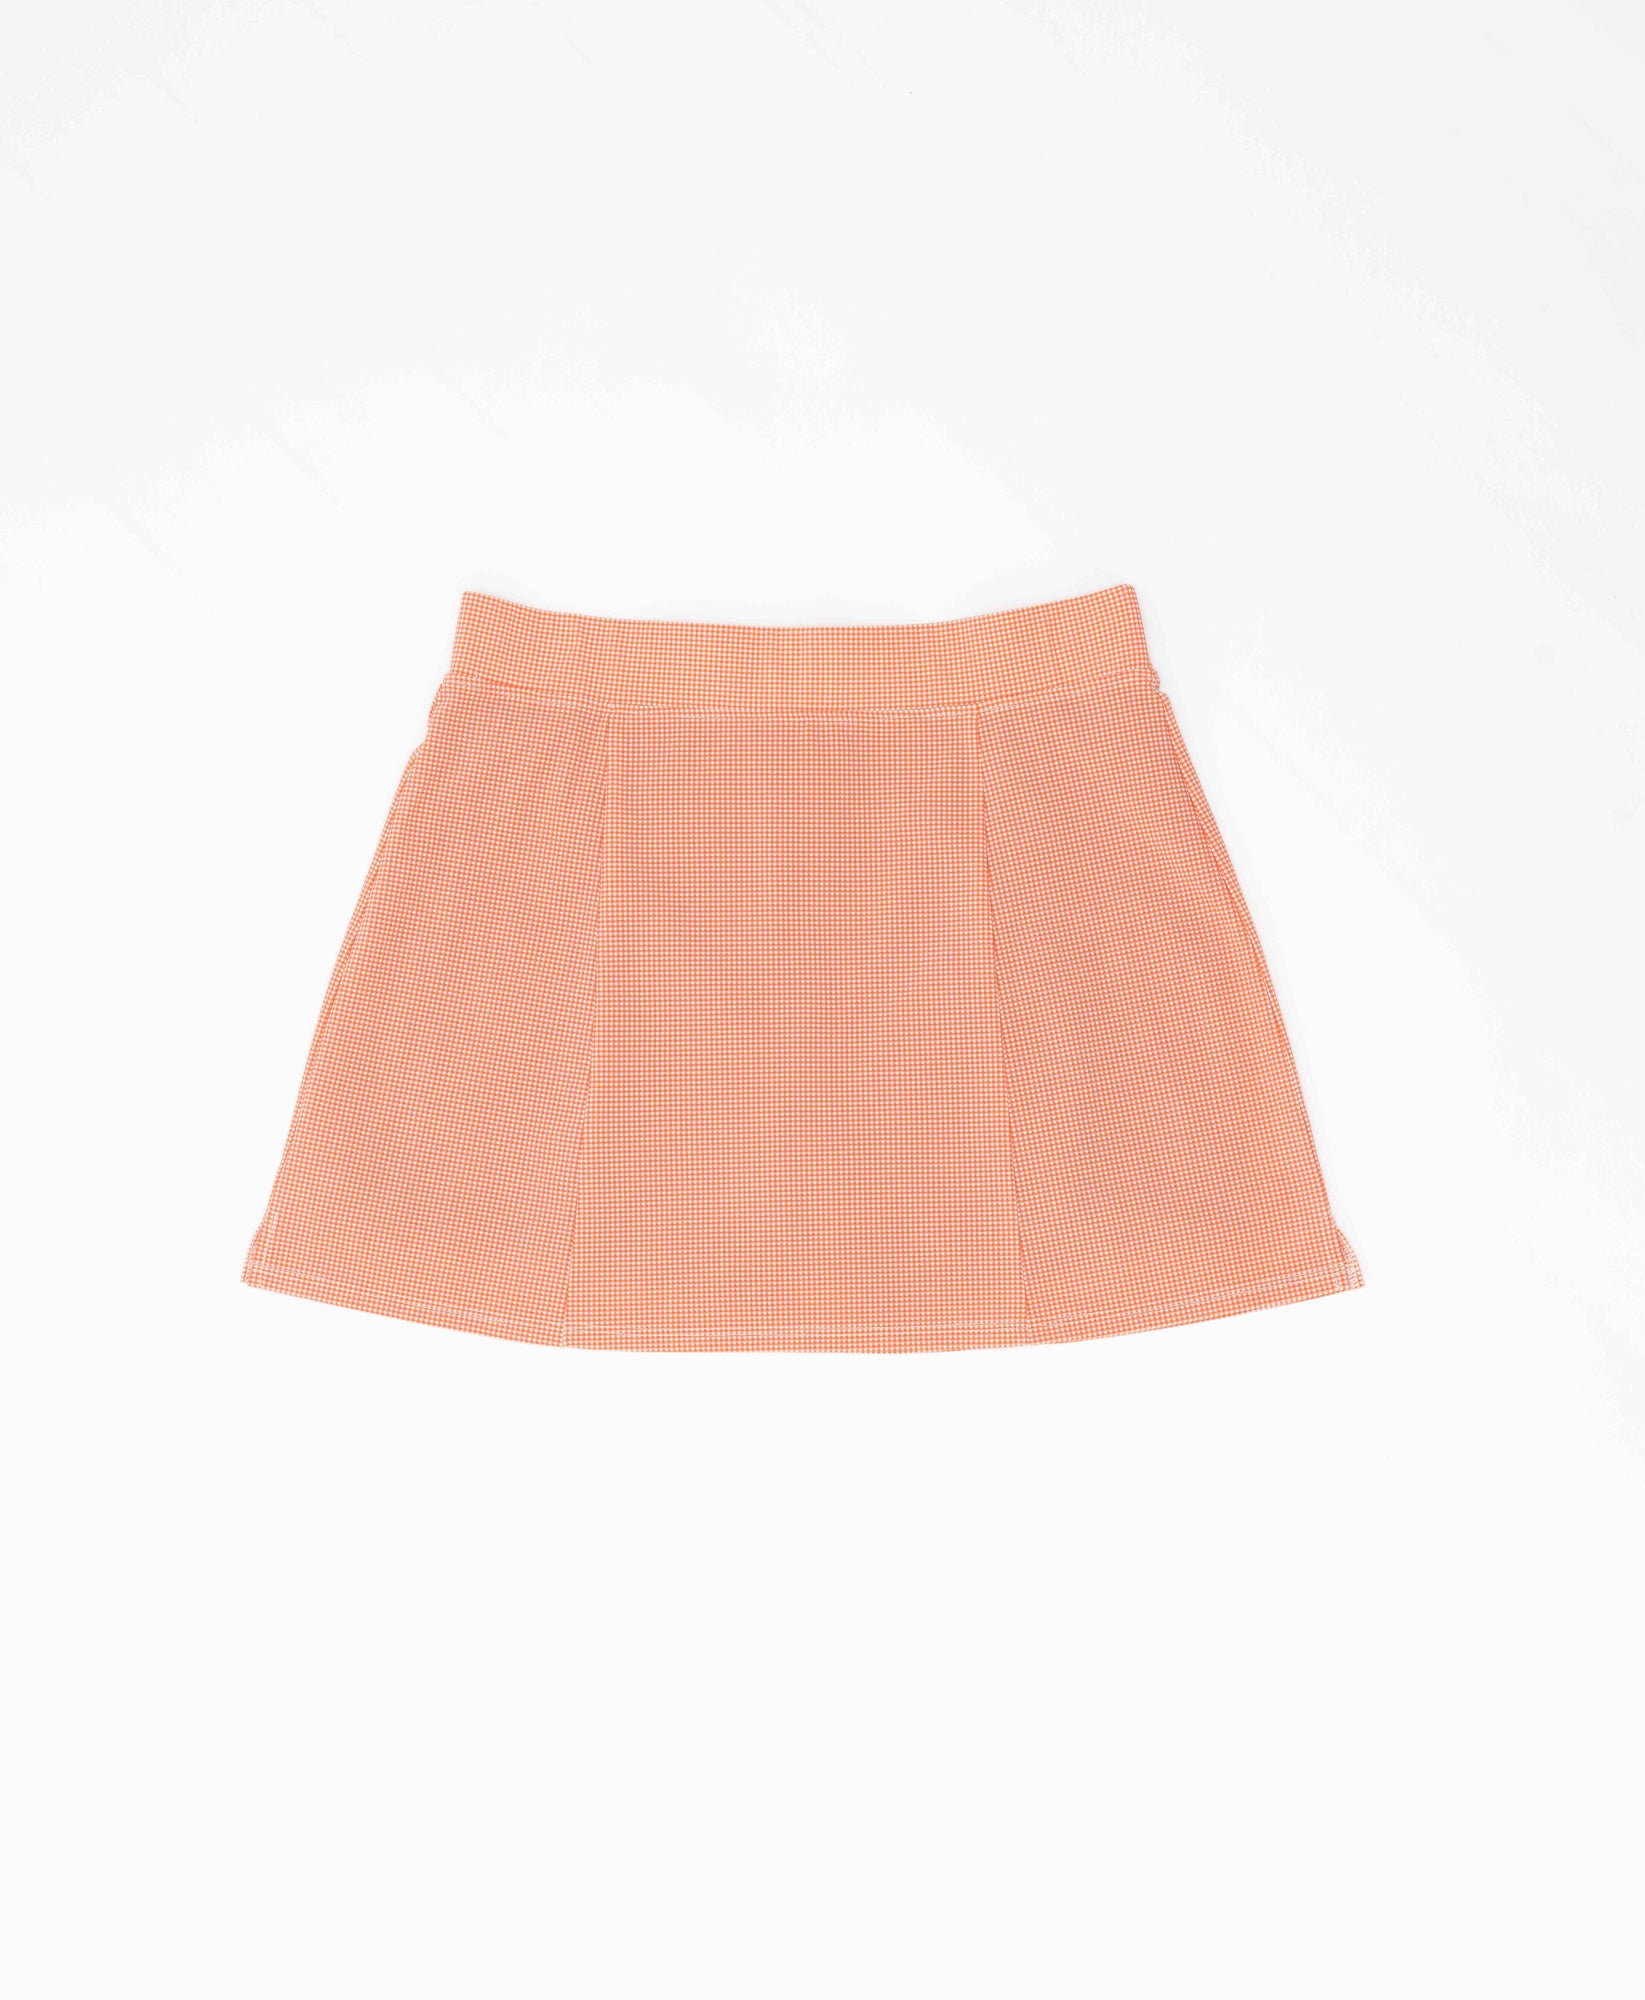 Wear One's At Simple Skort in Meadow Orange on Model Pulling Belt Front Detail View